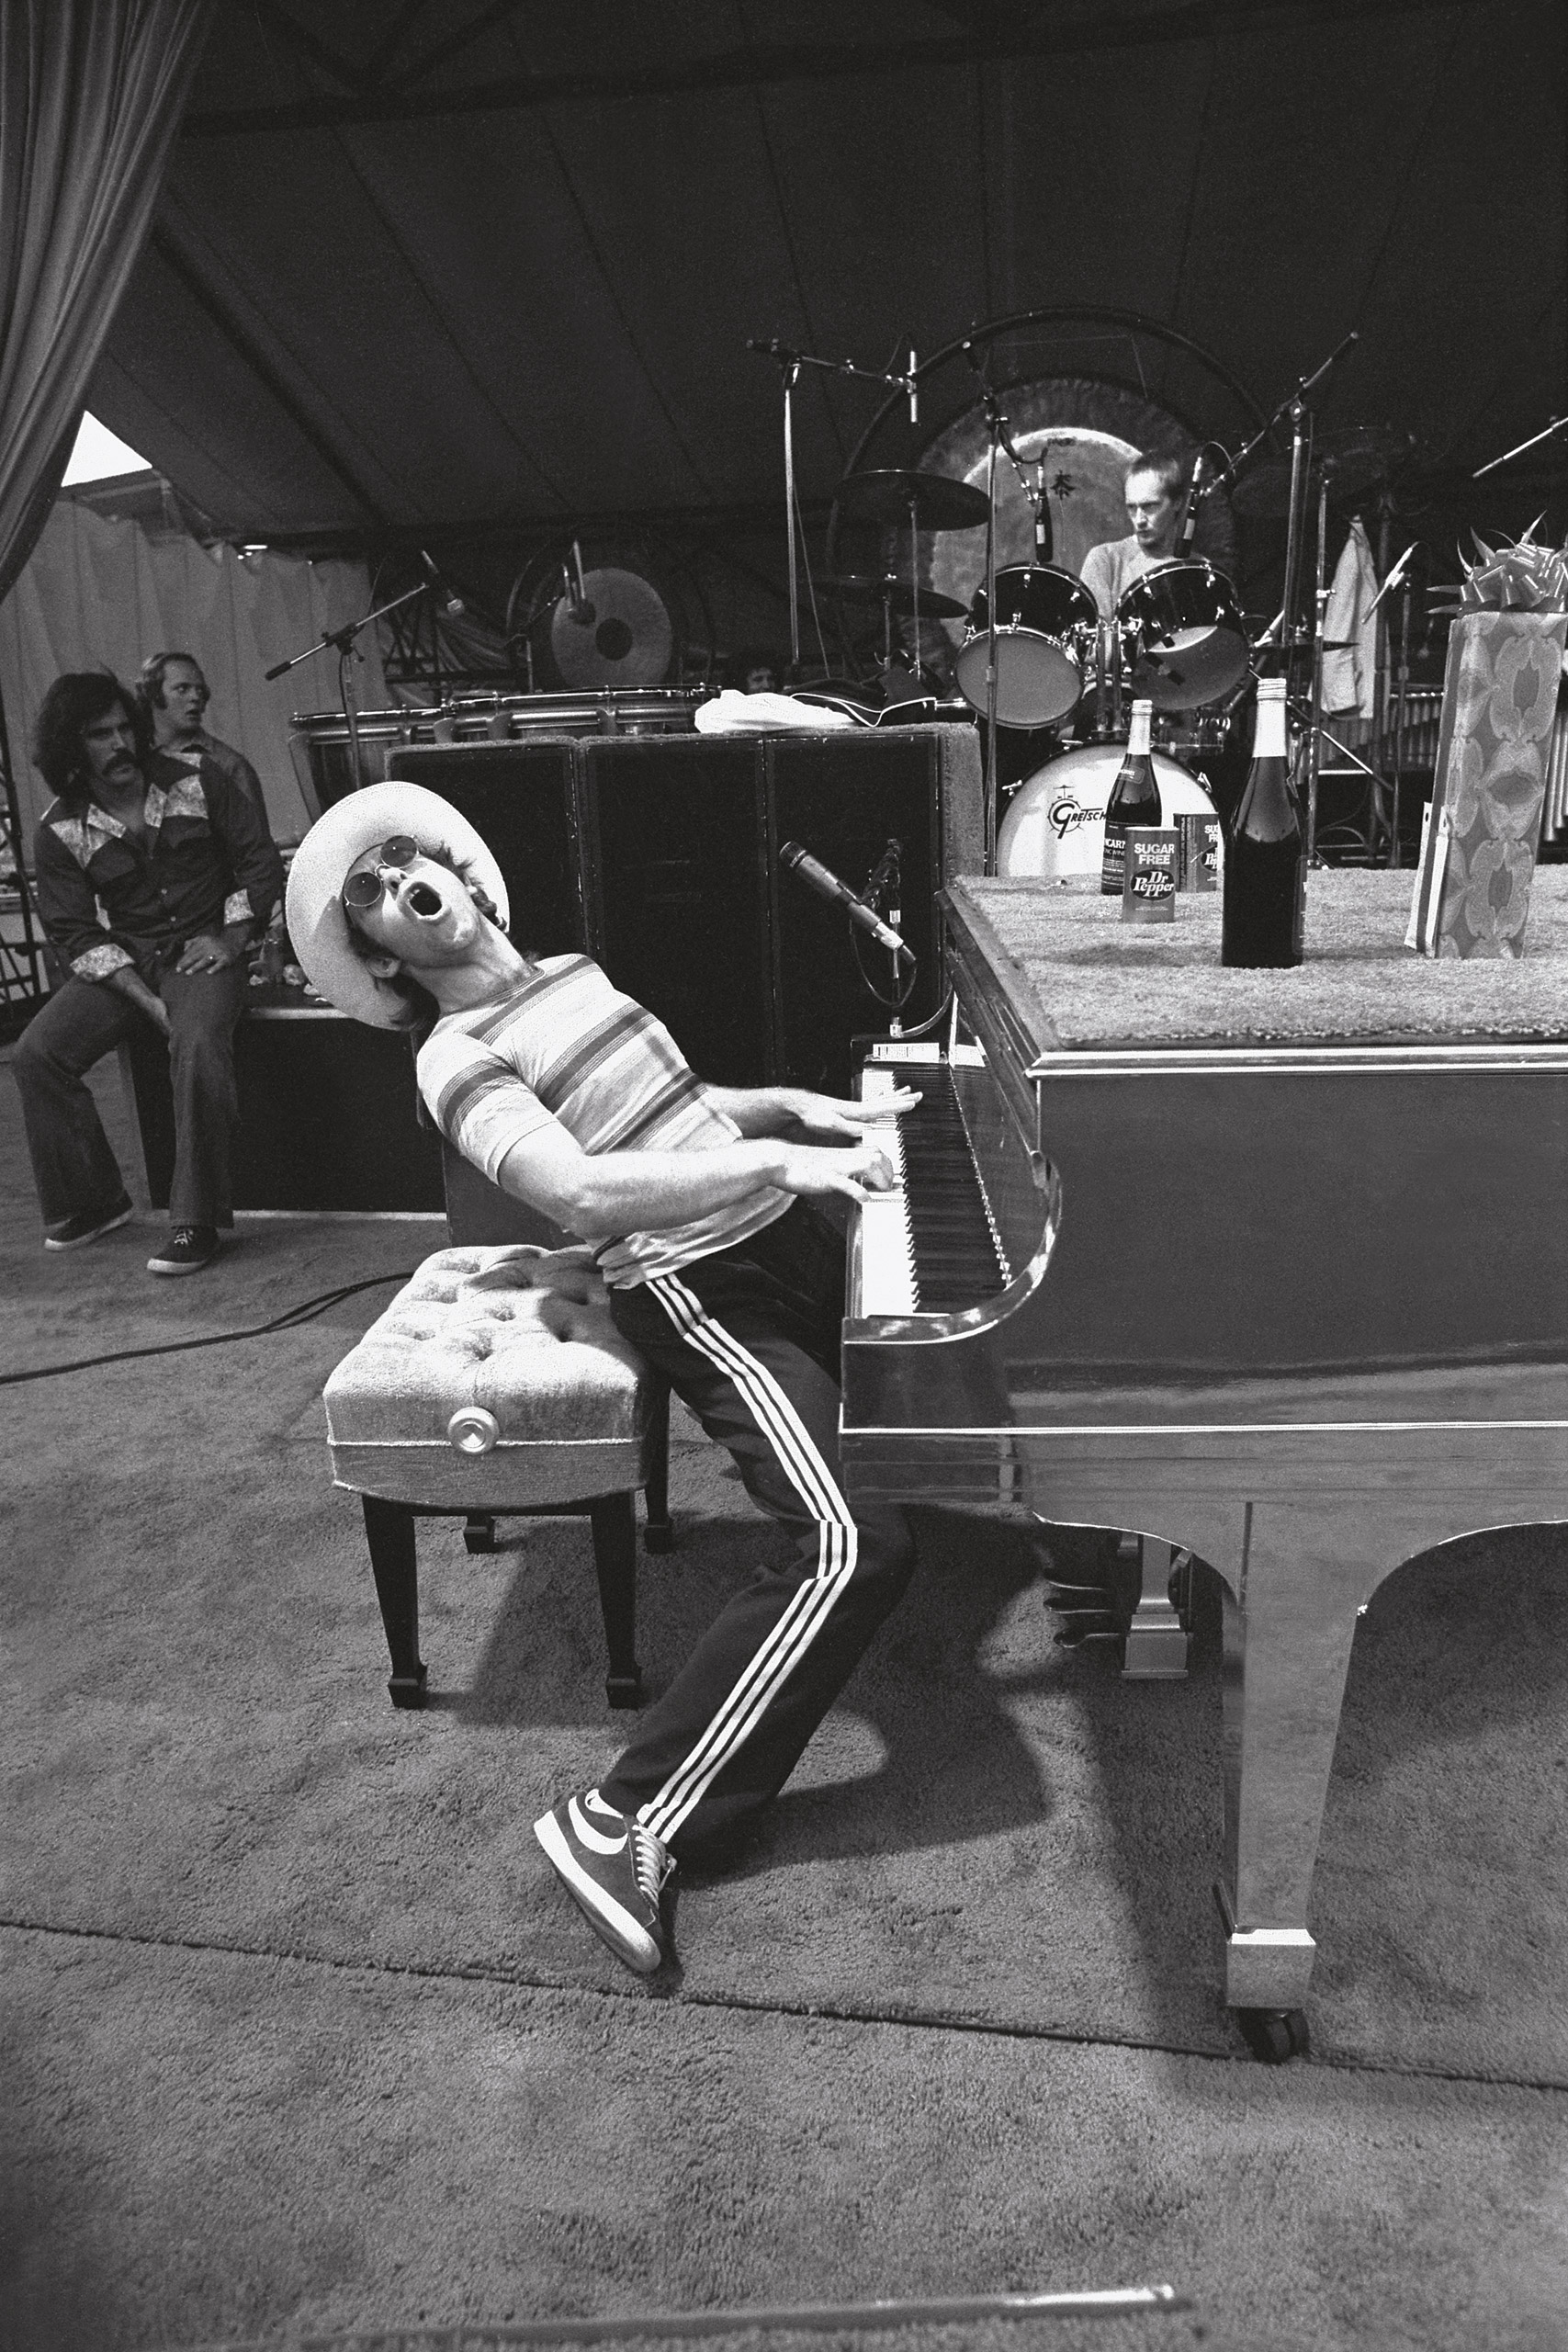 Even at rehearsal, Elton John gave a performance.